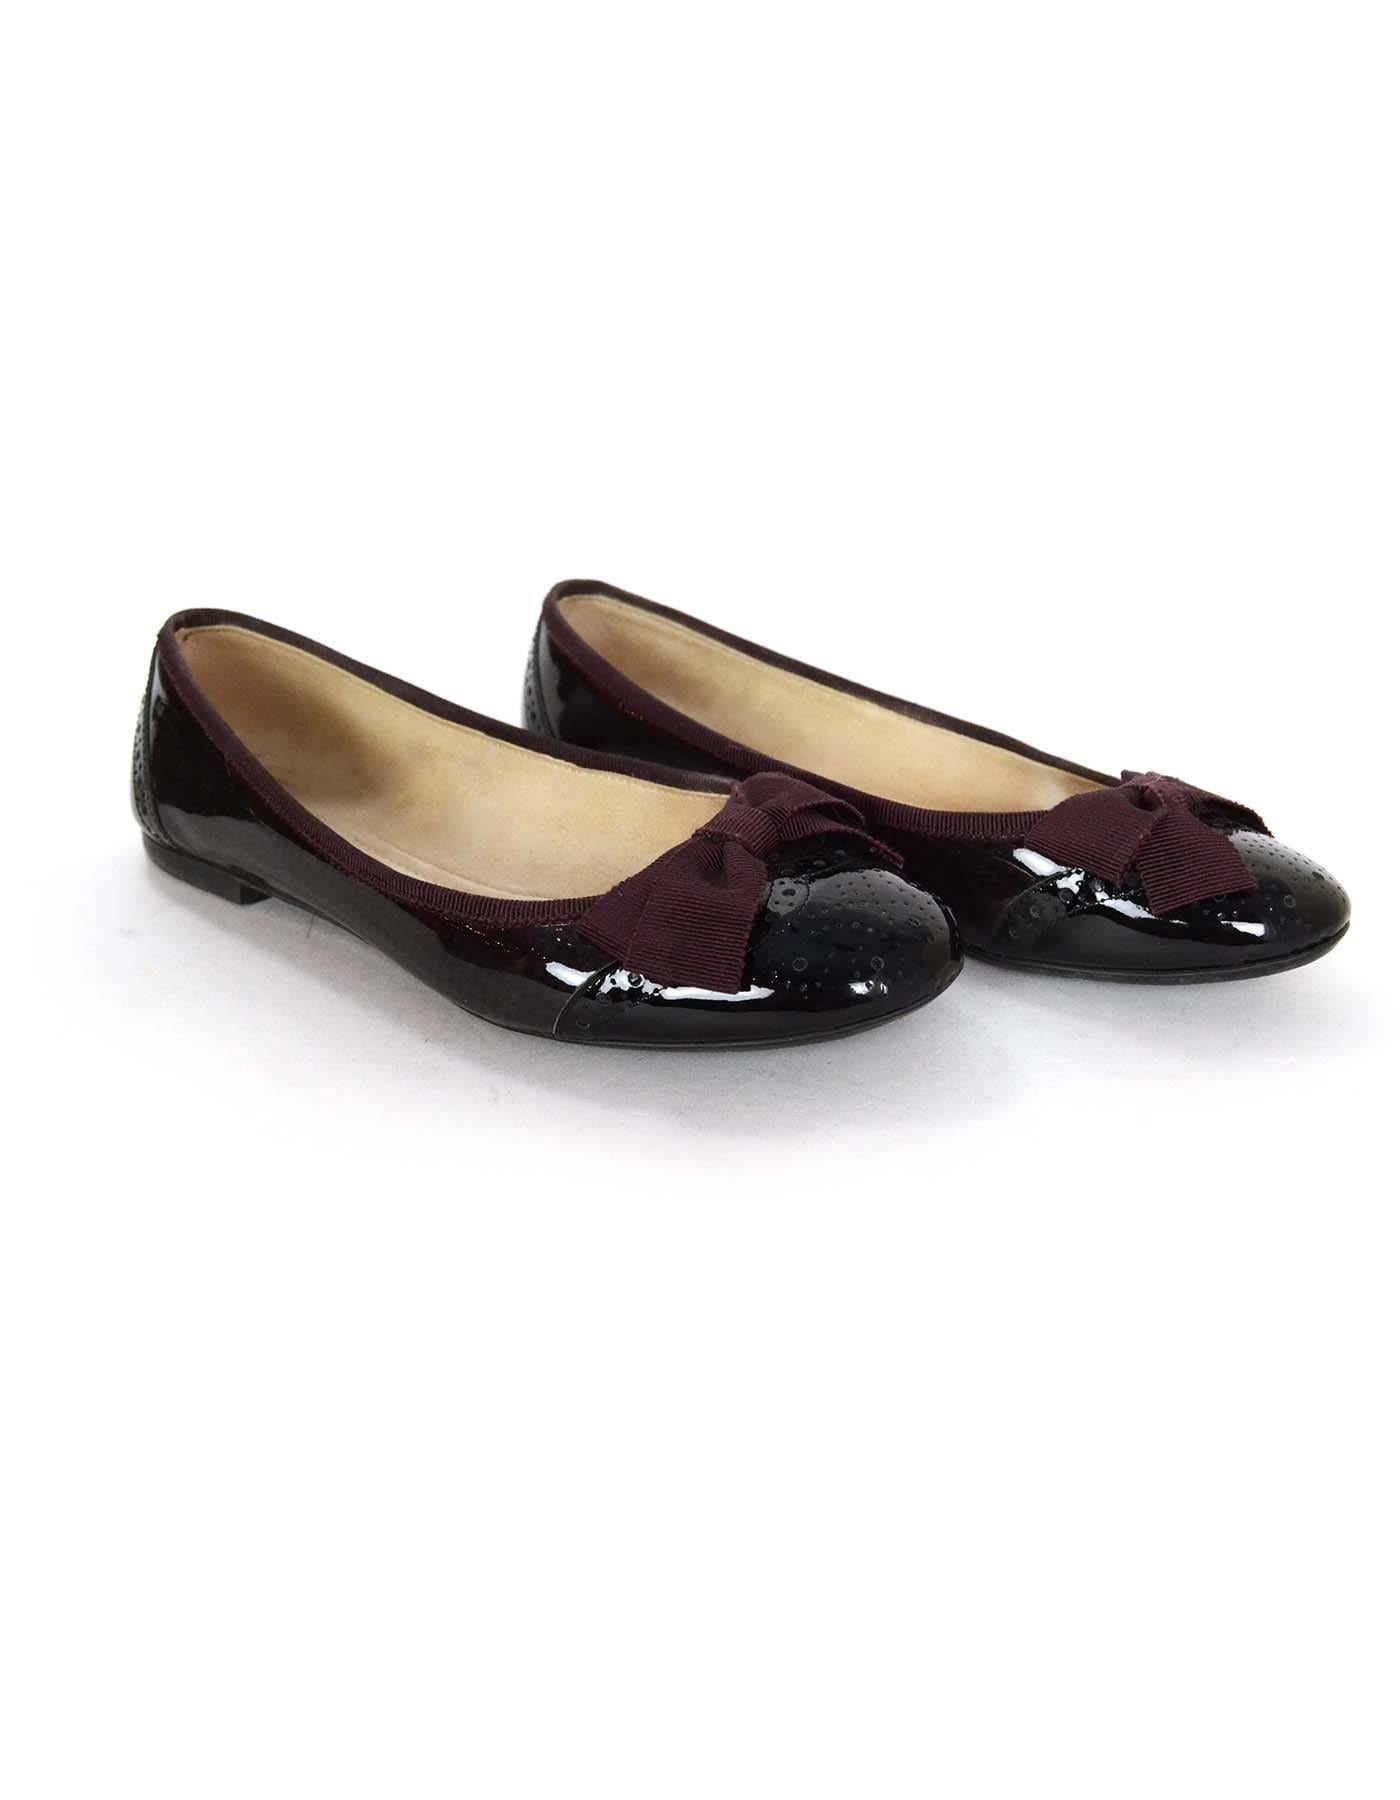 Women's Salvatore Ferragamo Black and Burgundy Patent Leather Flats Sz 6